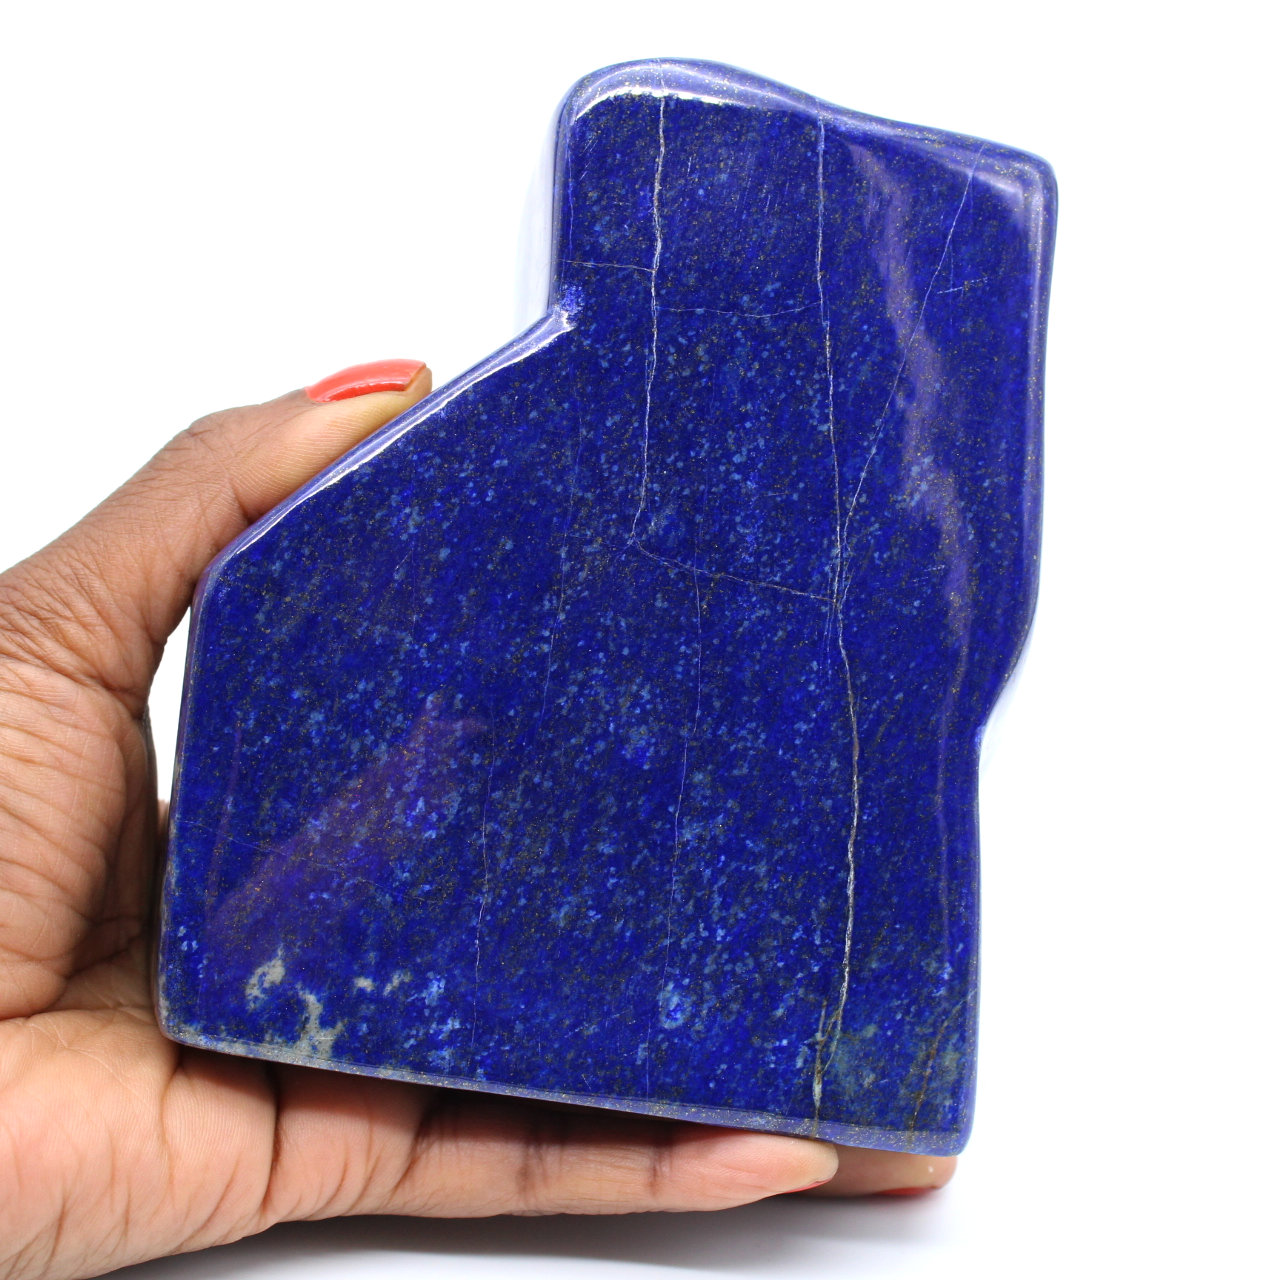 Large polished lapis lazuli block for collection